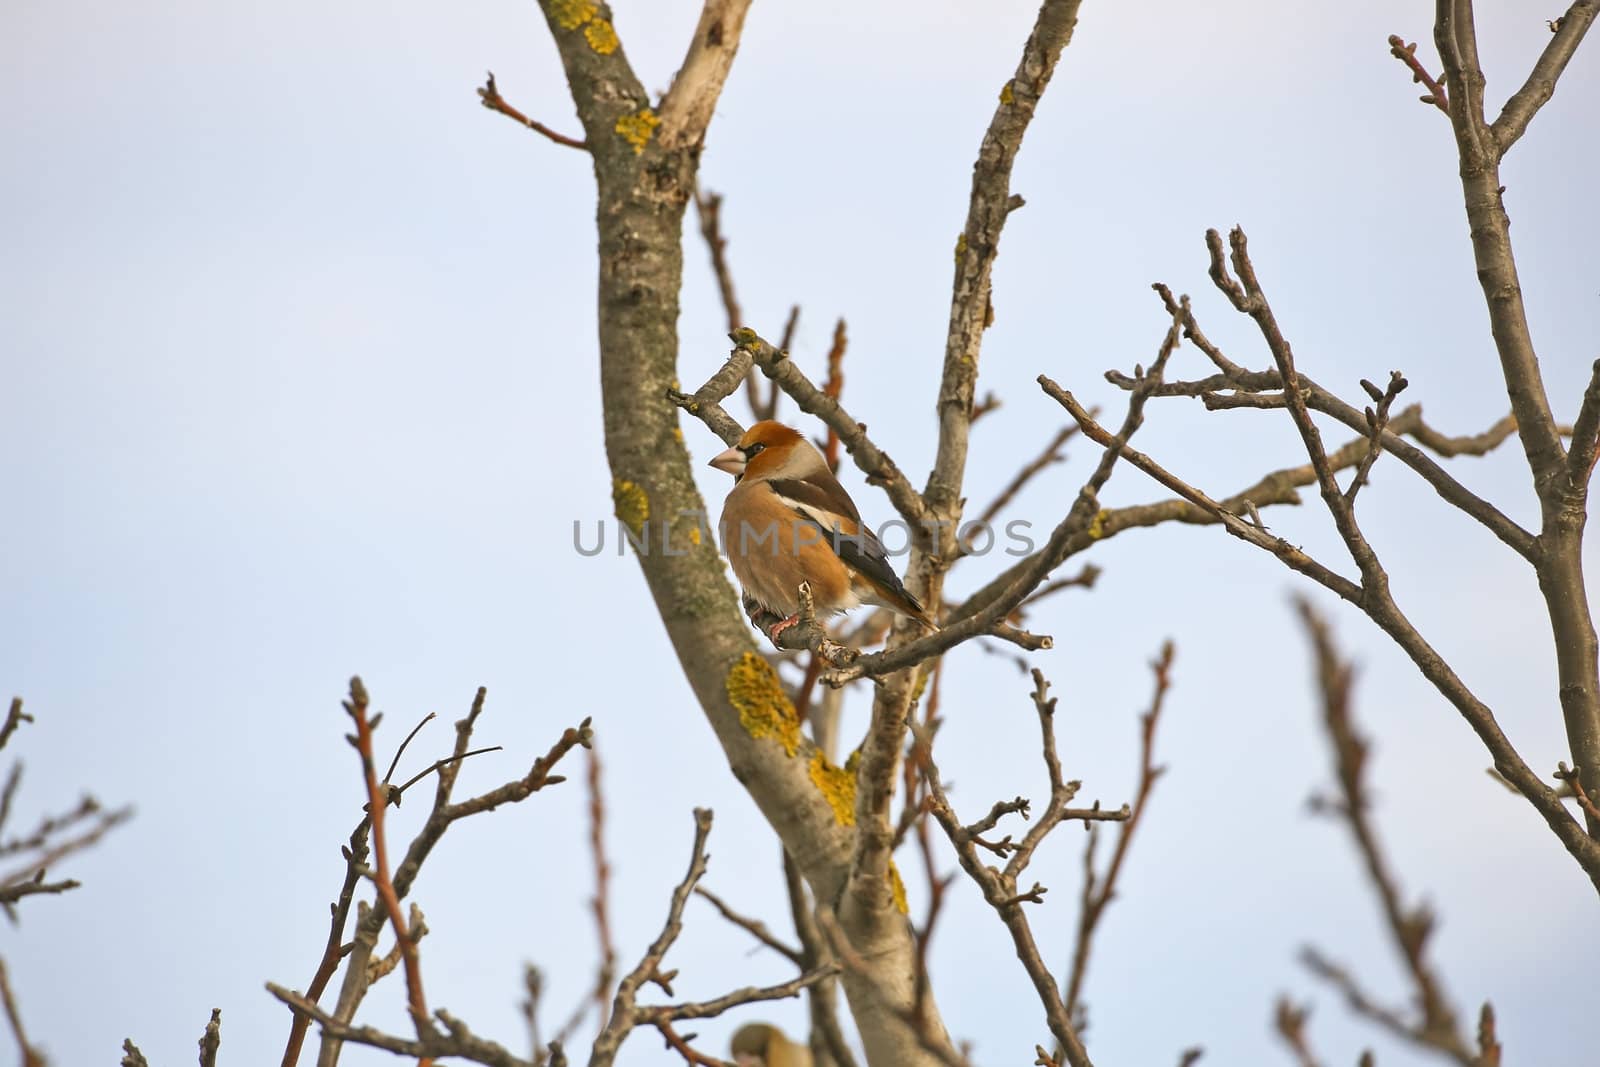 A hawfinch sitting on a branch